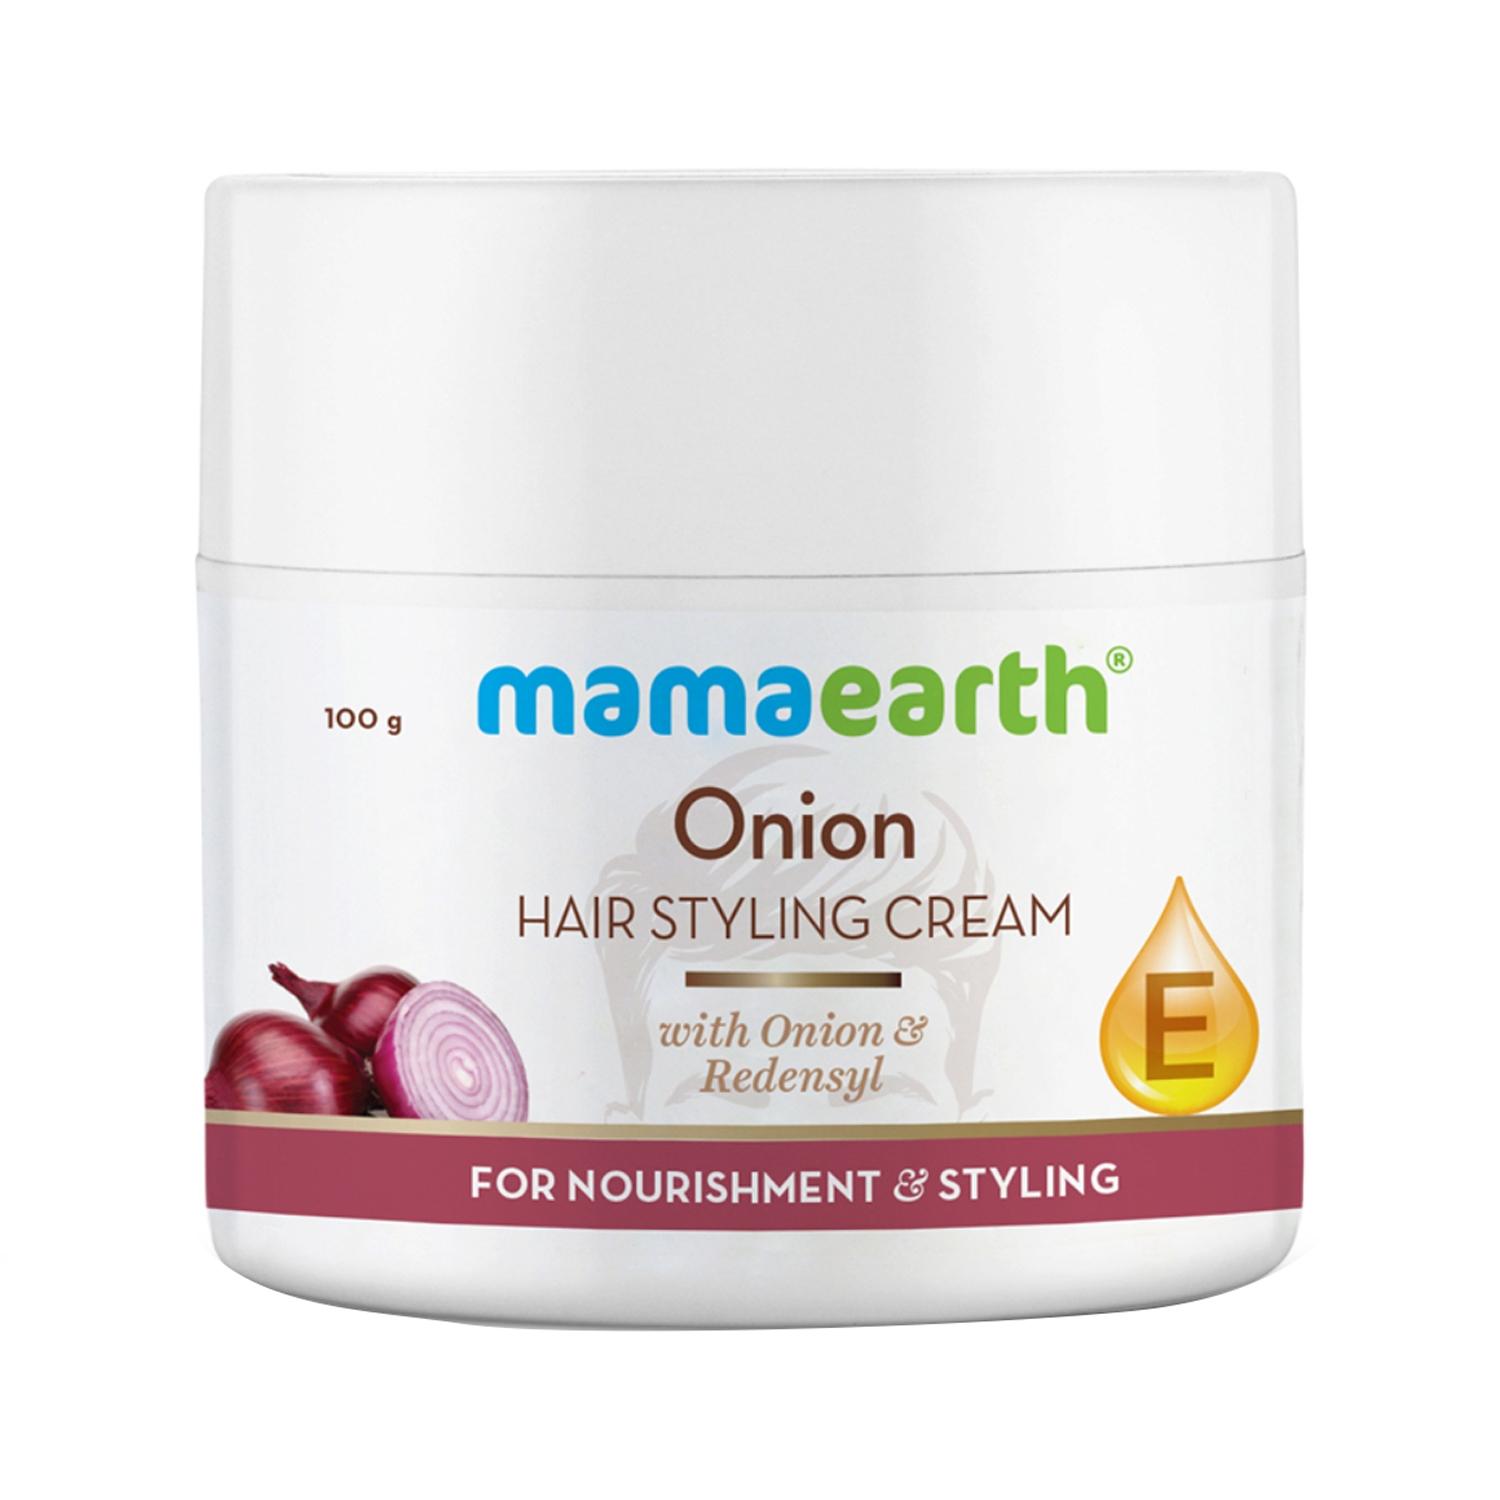 mamaearth onion hair styling cream (100g)